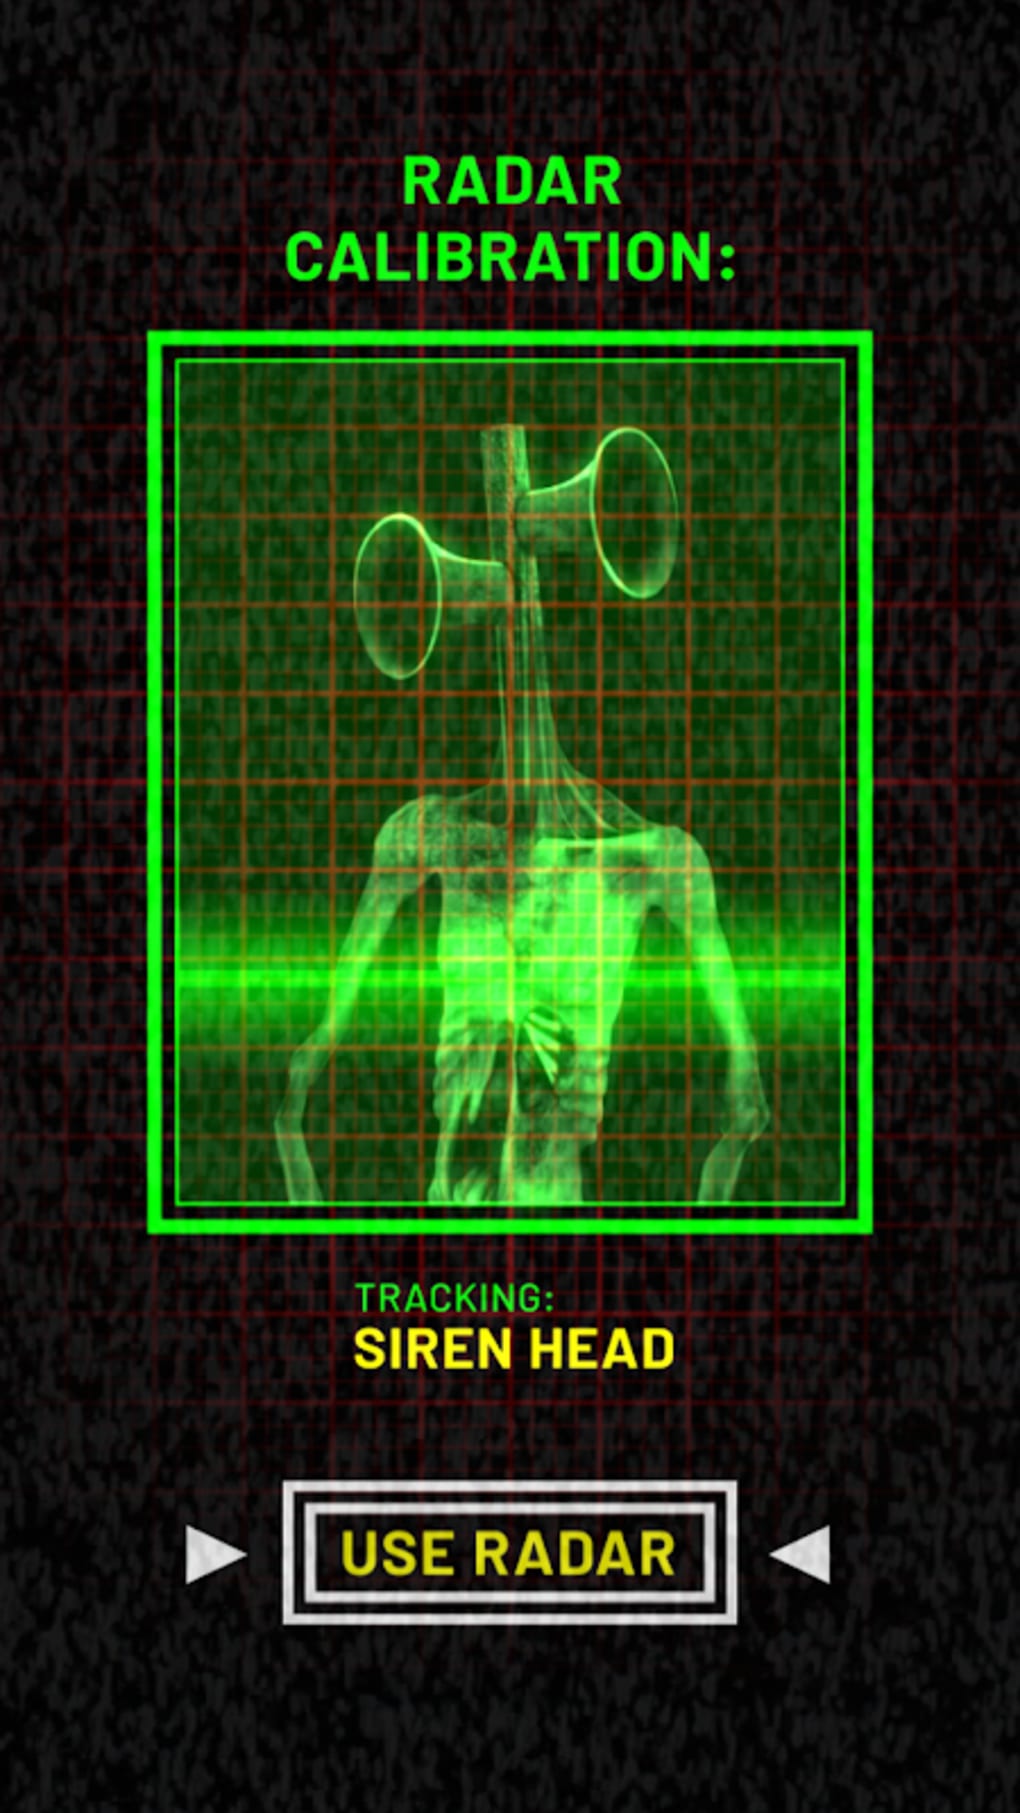 https://images.sftcdn.net/images/t_app-cover-l,f_auto/p/e1459f59-c8ae-48d3-8458-7eb1917e40ce/3339616303/siren-head-radar-tracker-screenshot.png